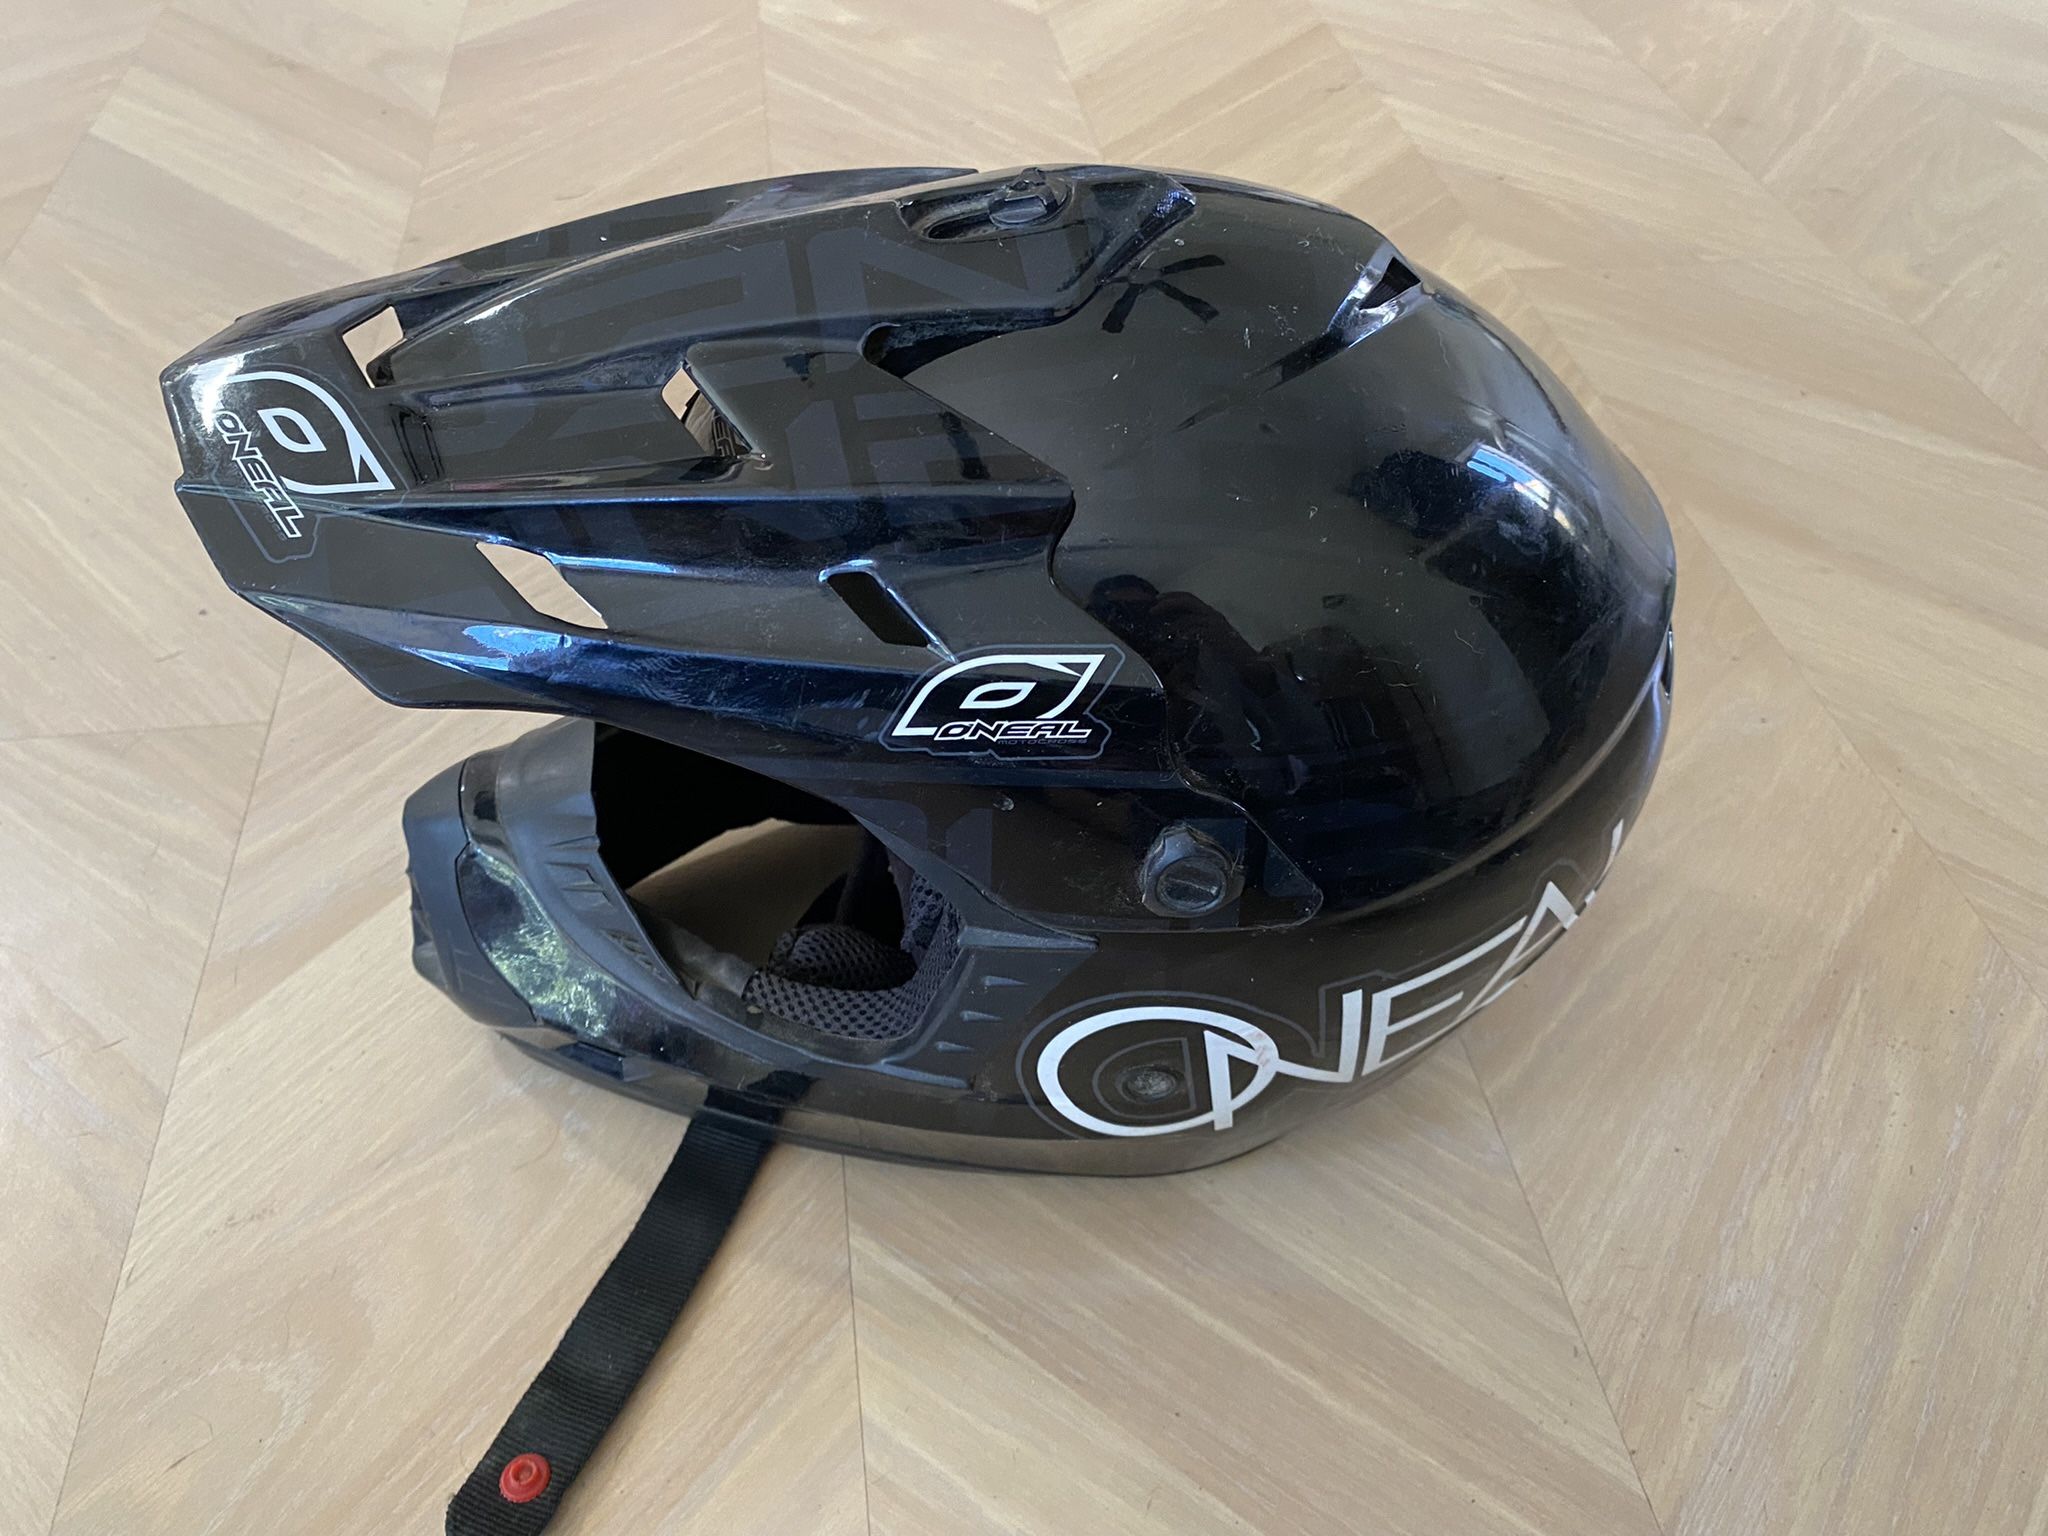 Youth Dirt Bike Helmet Size Small- O’Neil